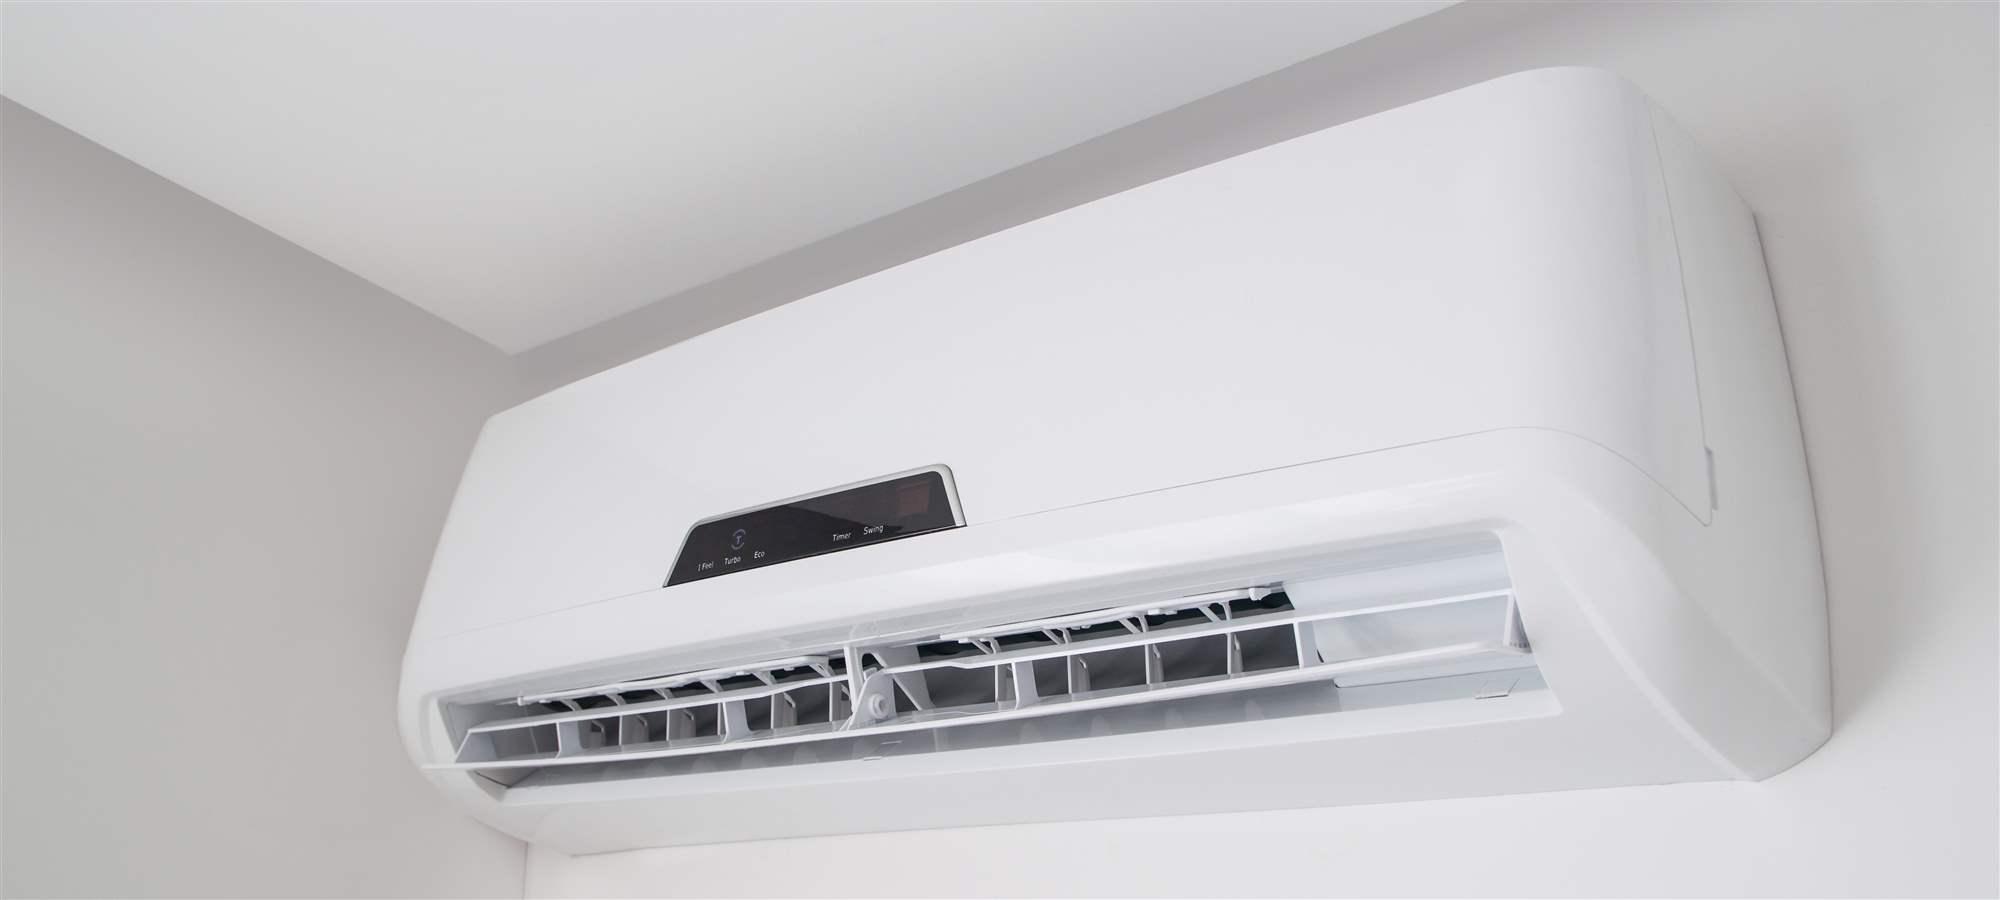 An energy efficient ductless indoor heat pump unit